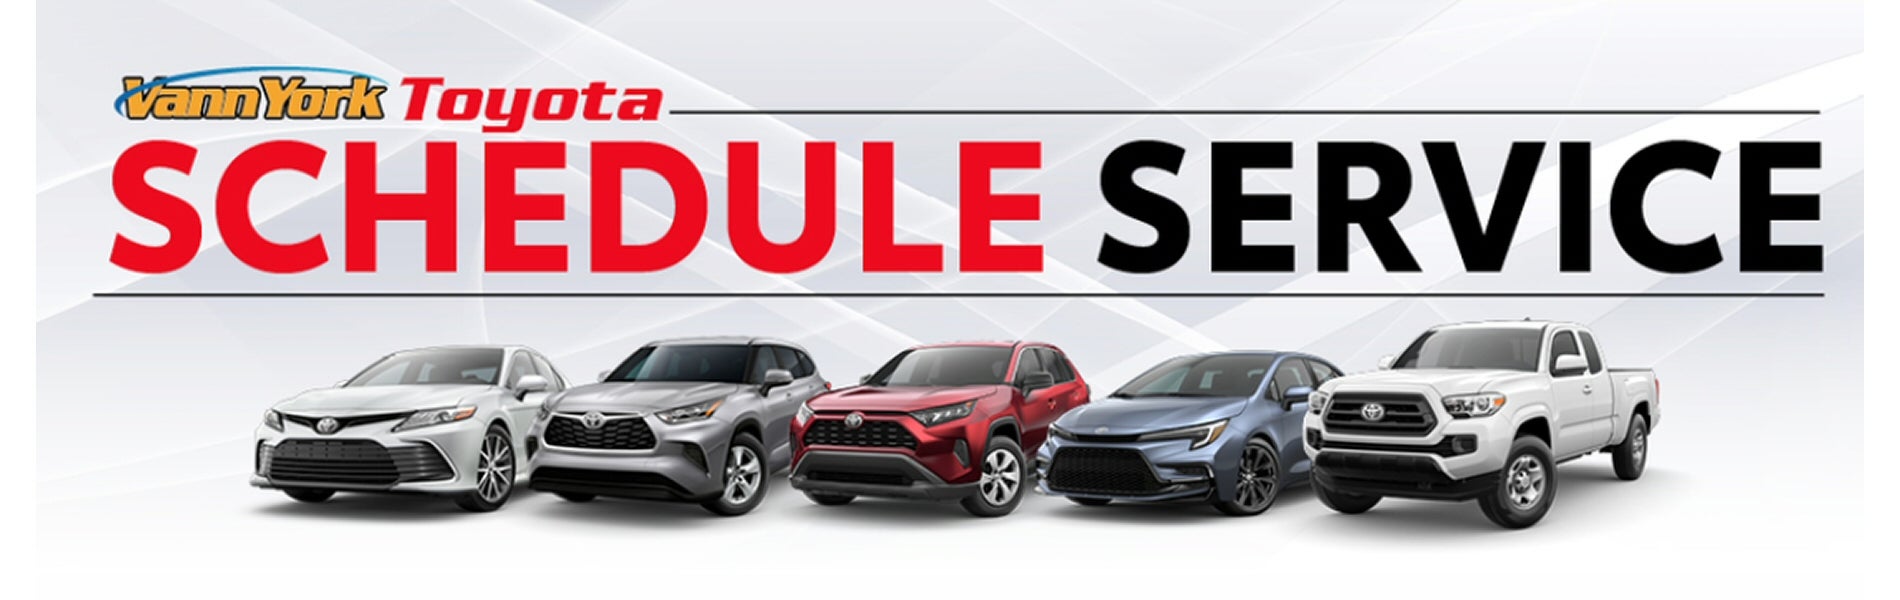 Schedule Your Toyota Service at Vann York Toyota